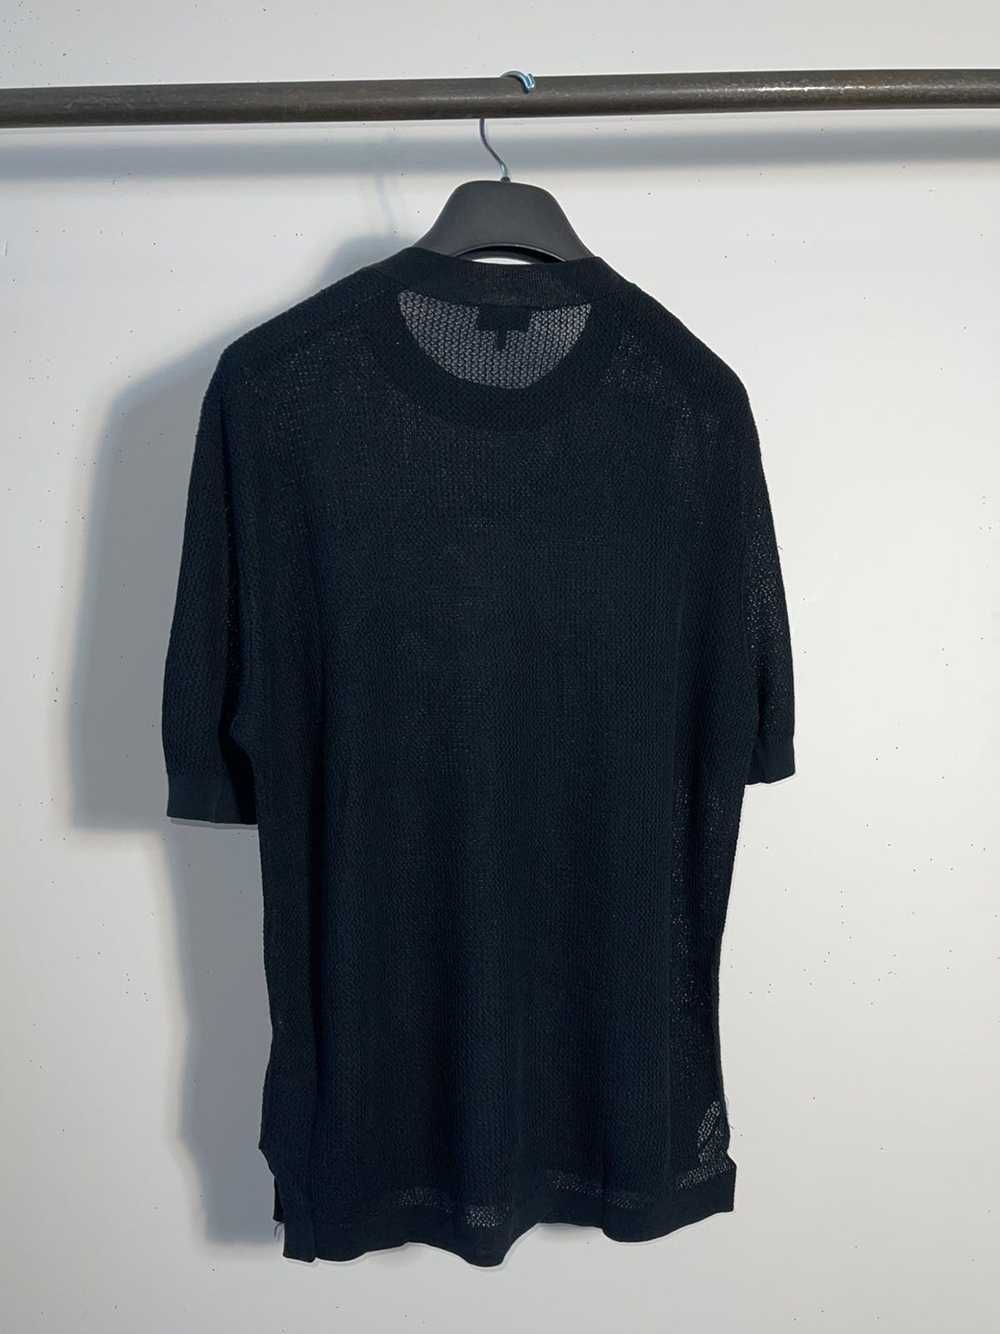 Lanvin Lanvin knit tshirt - image 2